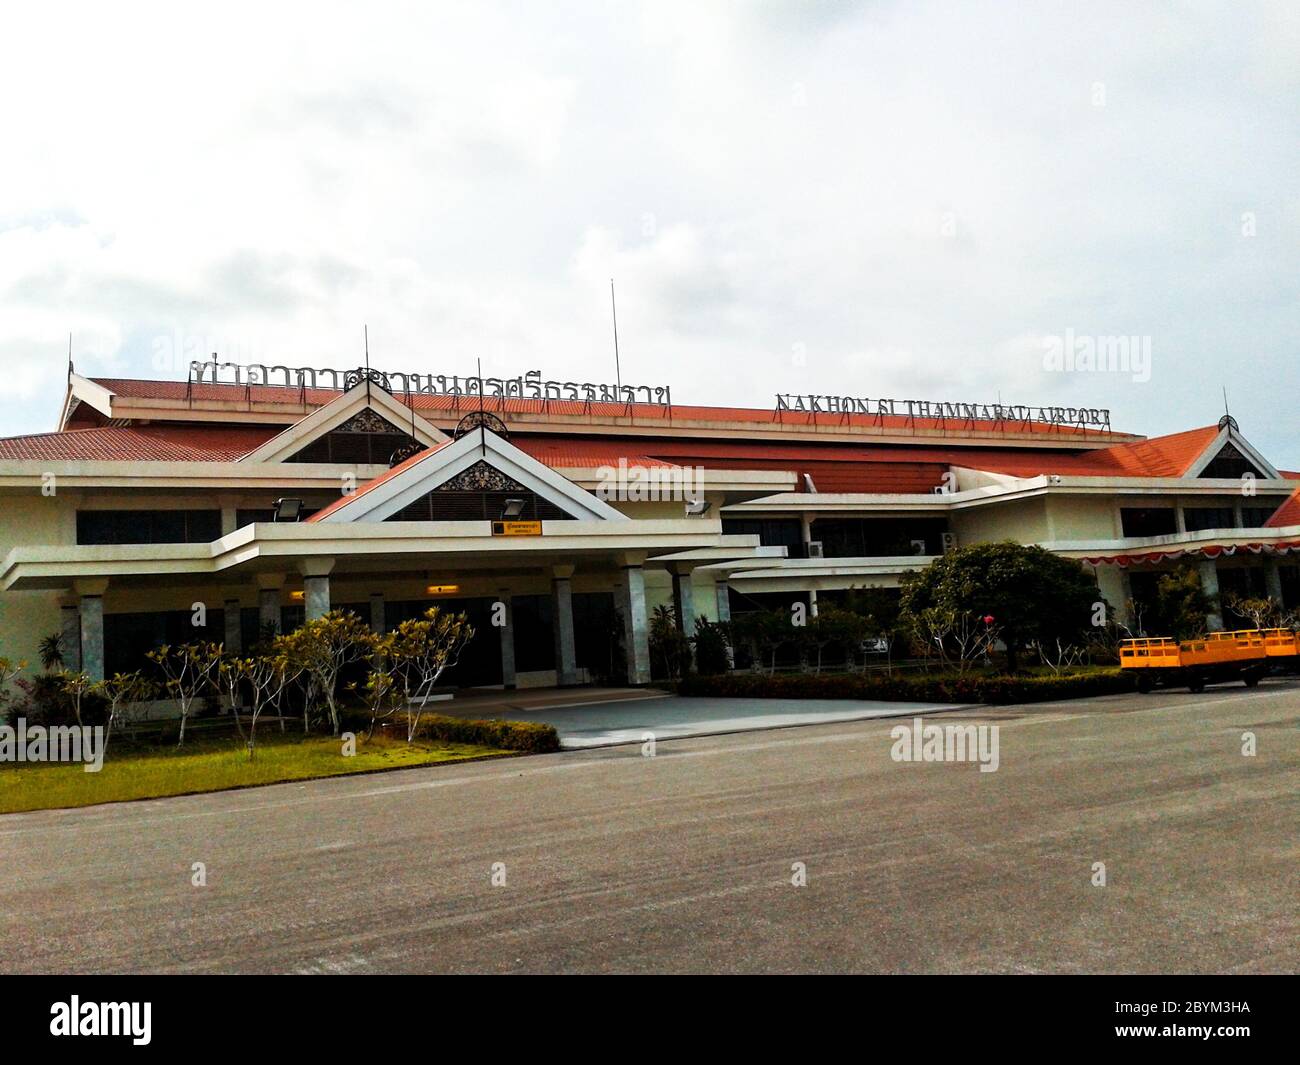 Afvist annoncere Lav vej nakhon si thammarat airport thailand, landing field near the terminal Stock  Photo - Alamy